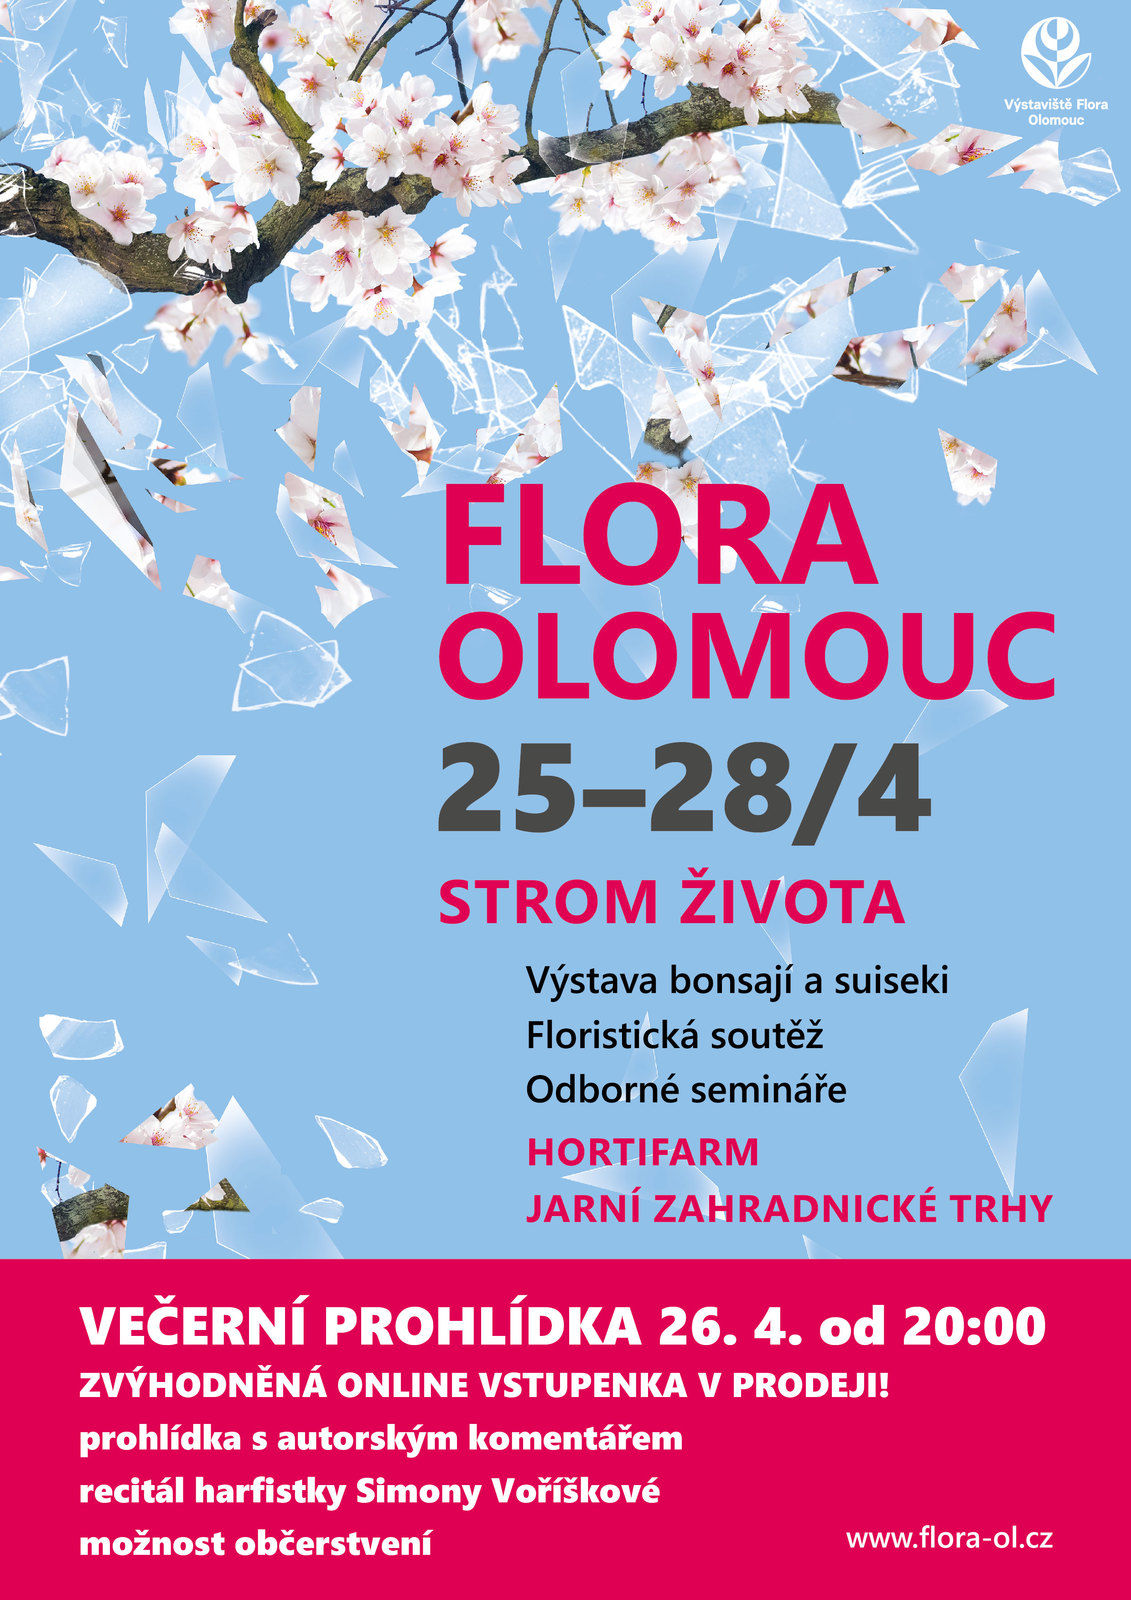 Flora Olomouc 25. - 28. 4. 2019.jpg